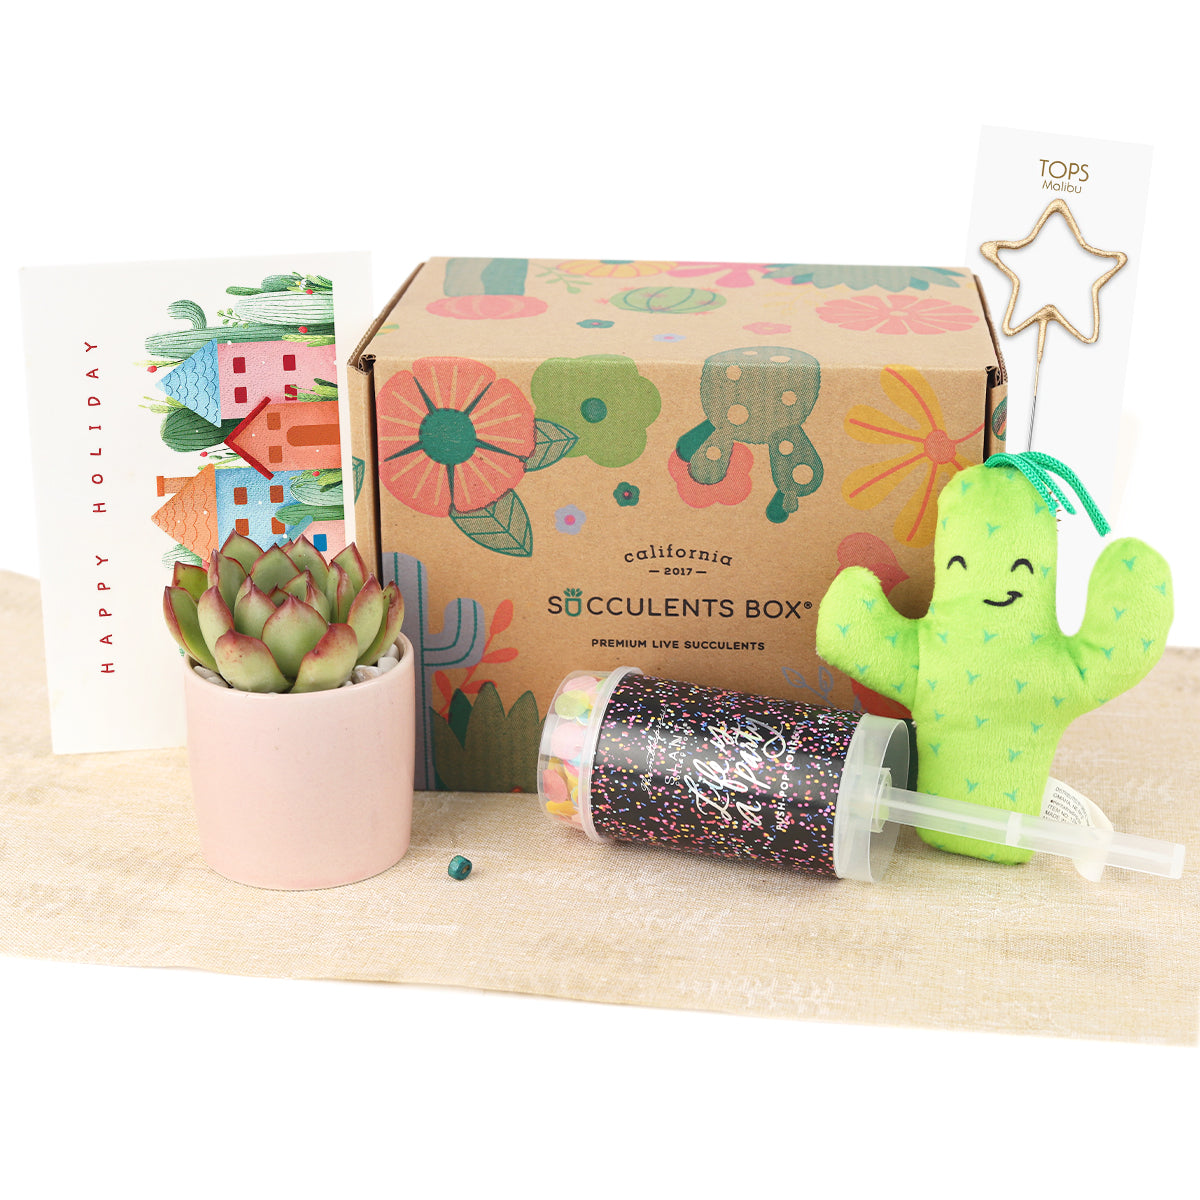 Holiday Gift Box - 1 Succulent 1 Sparkler 1 Confetti Popper & 1 Stuffed Cactus